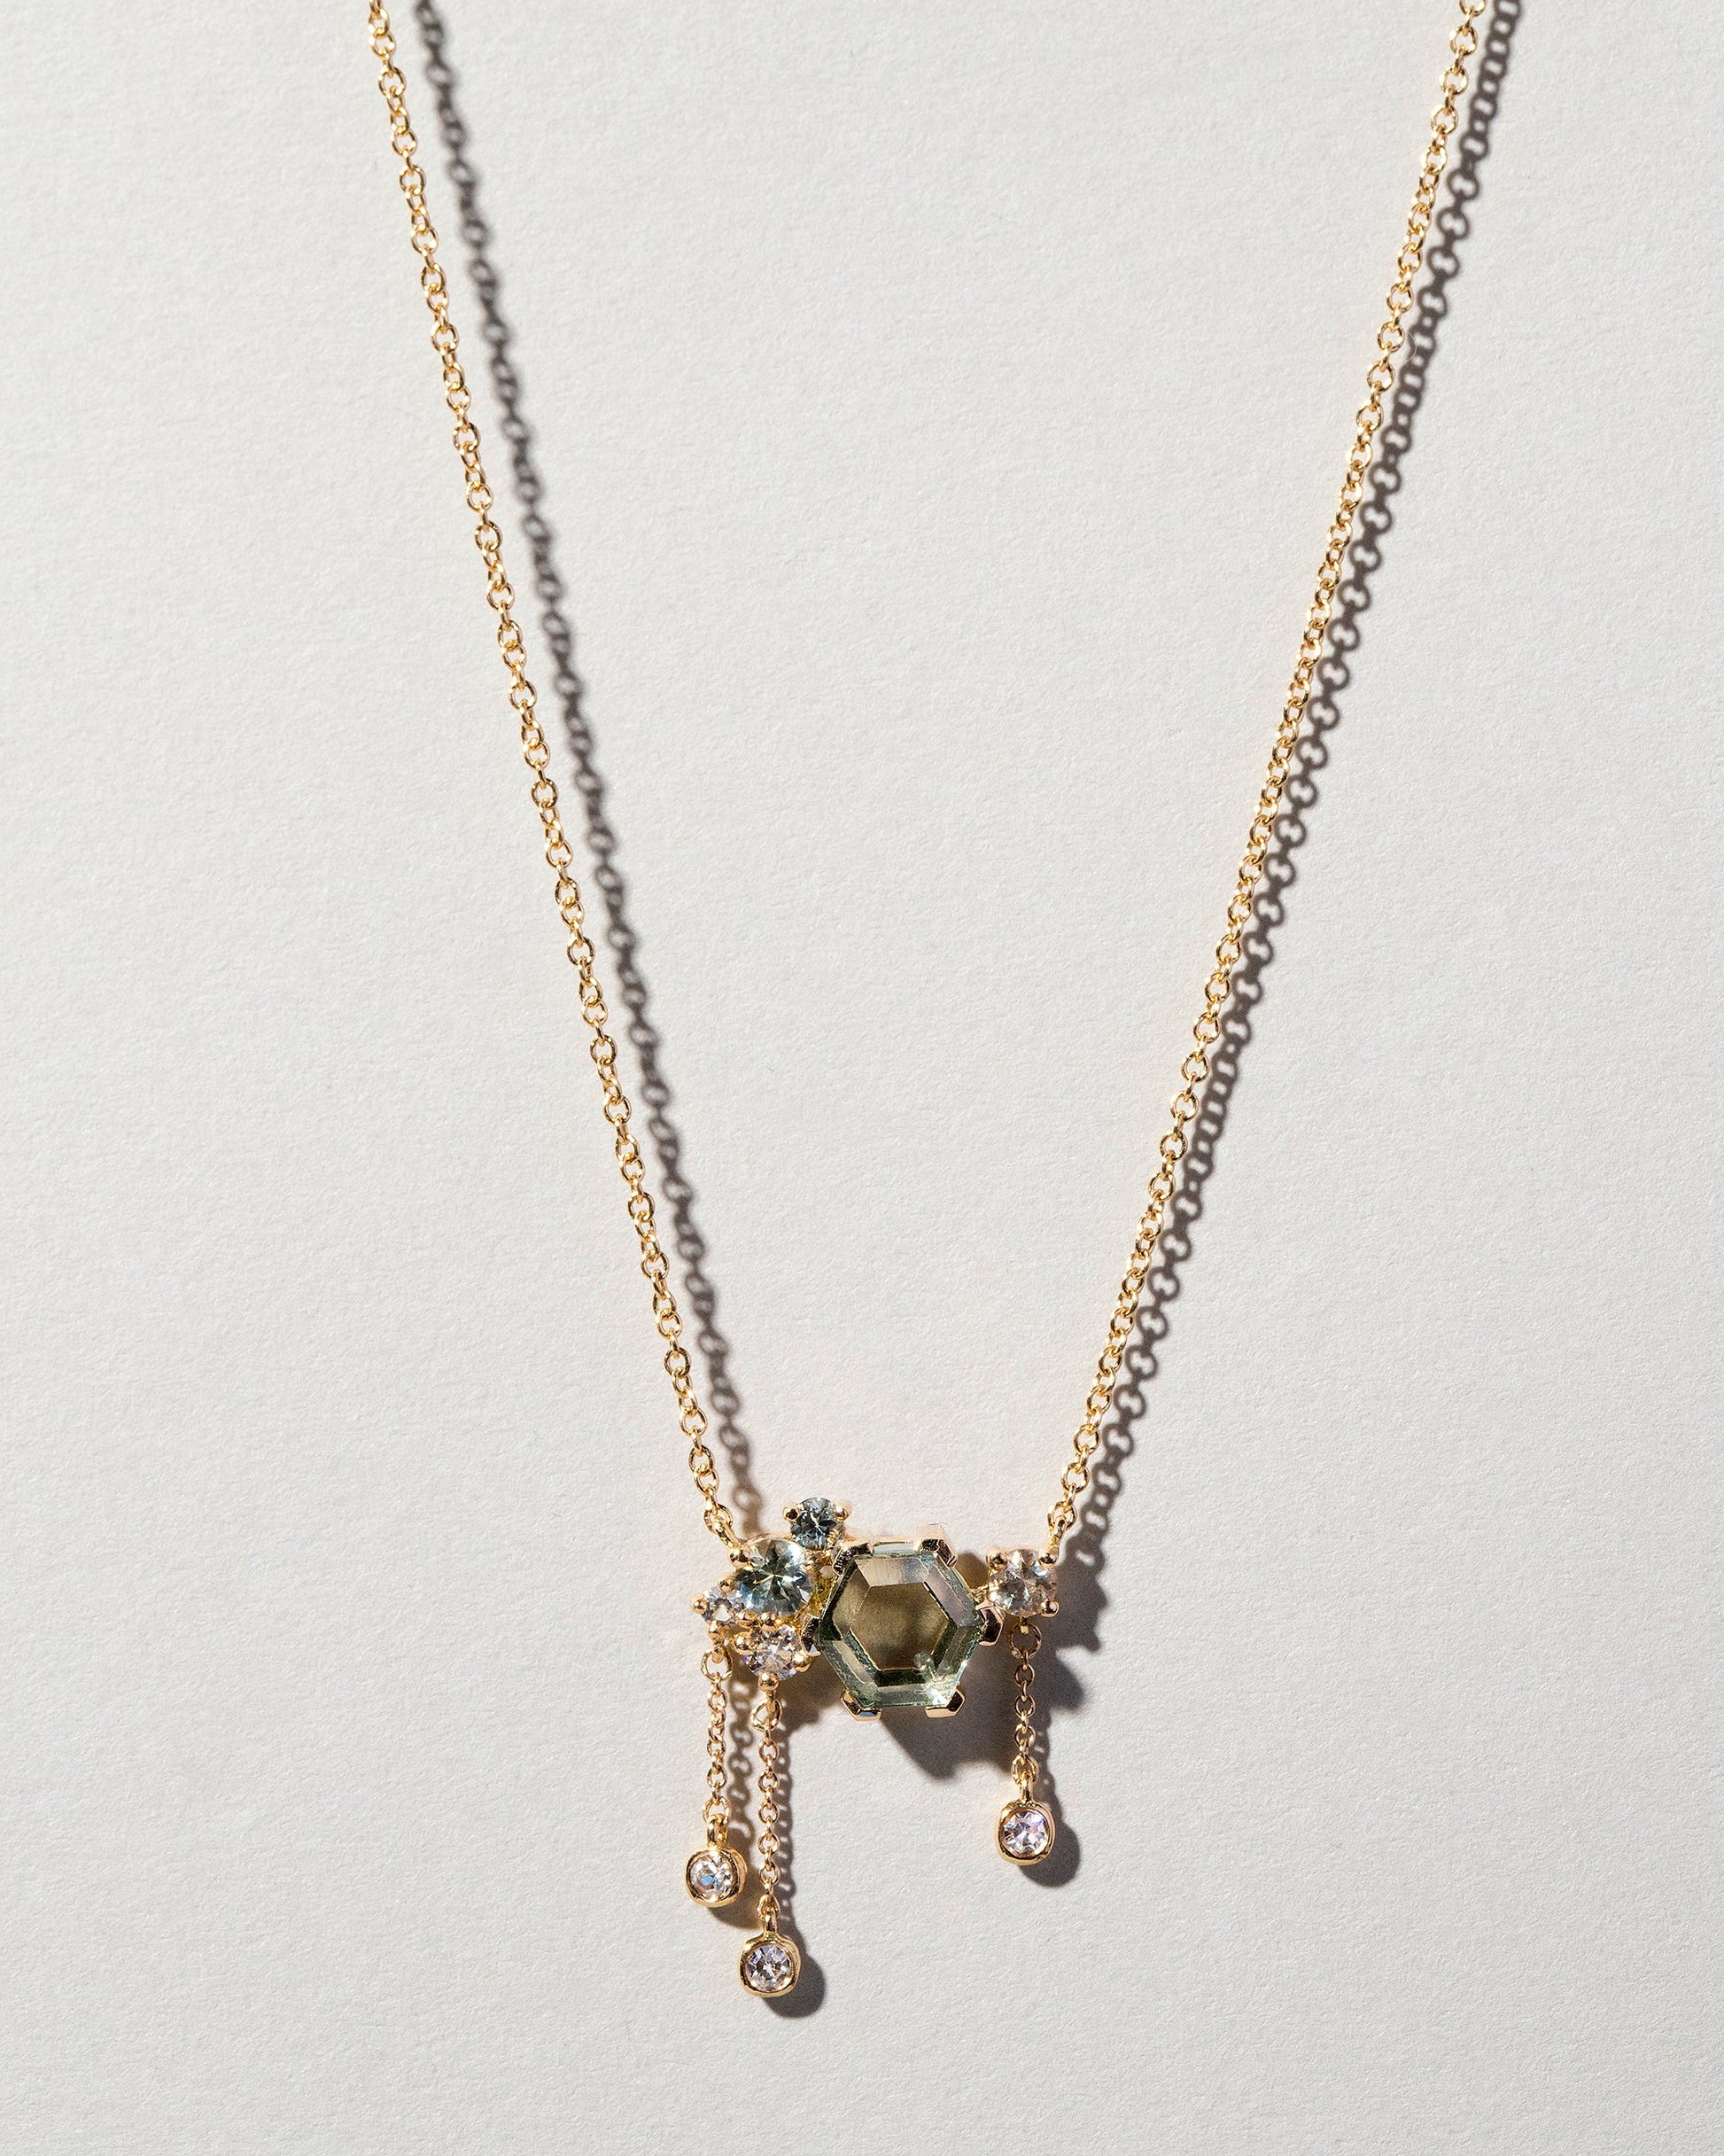  Hexagonal Slice Sapphire Necklace - Final Sale on light color background.